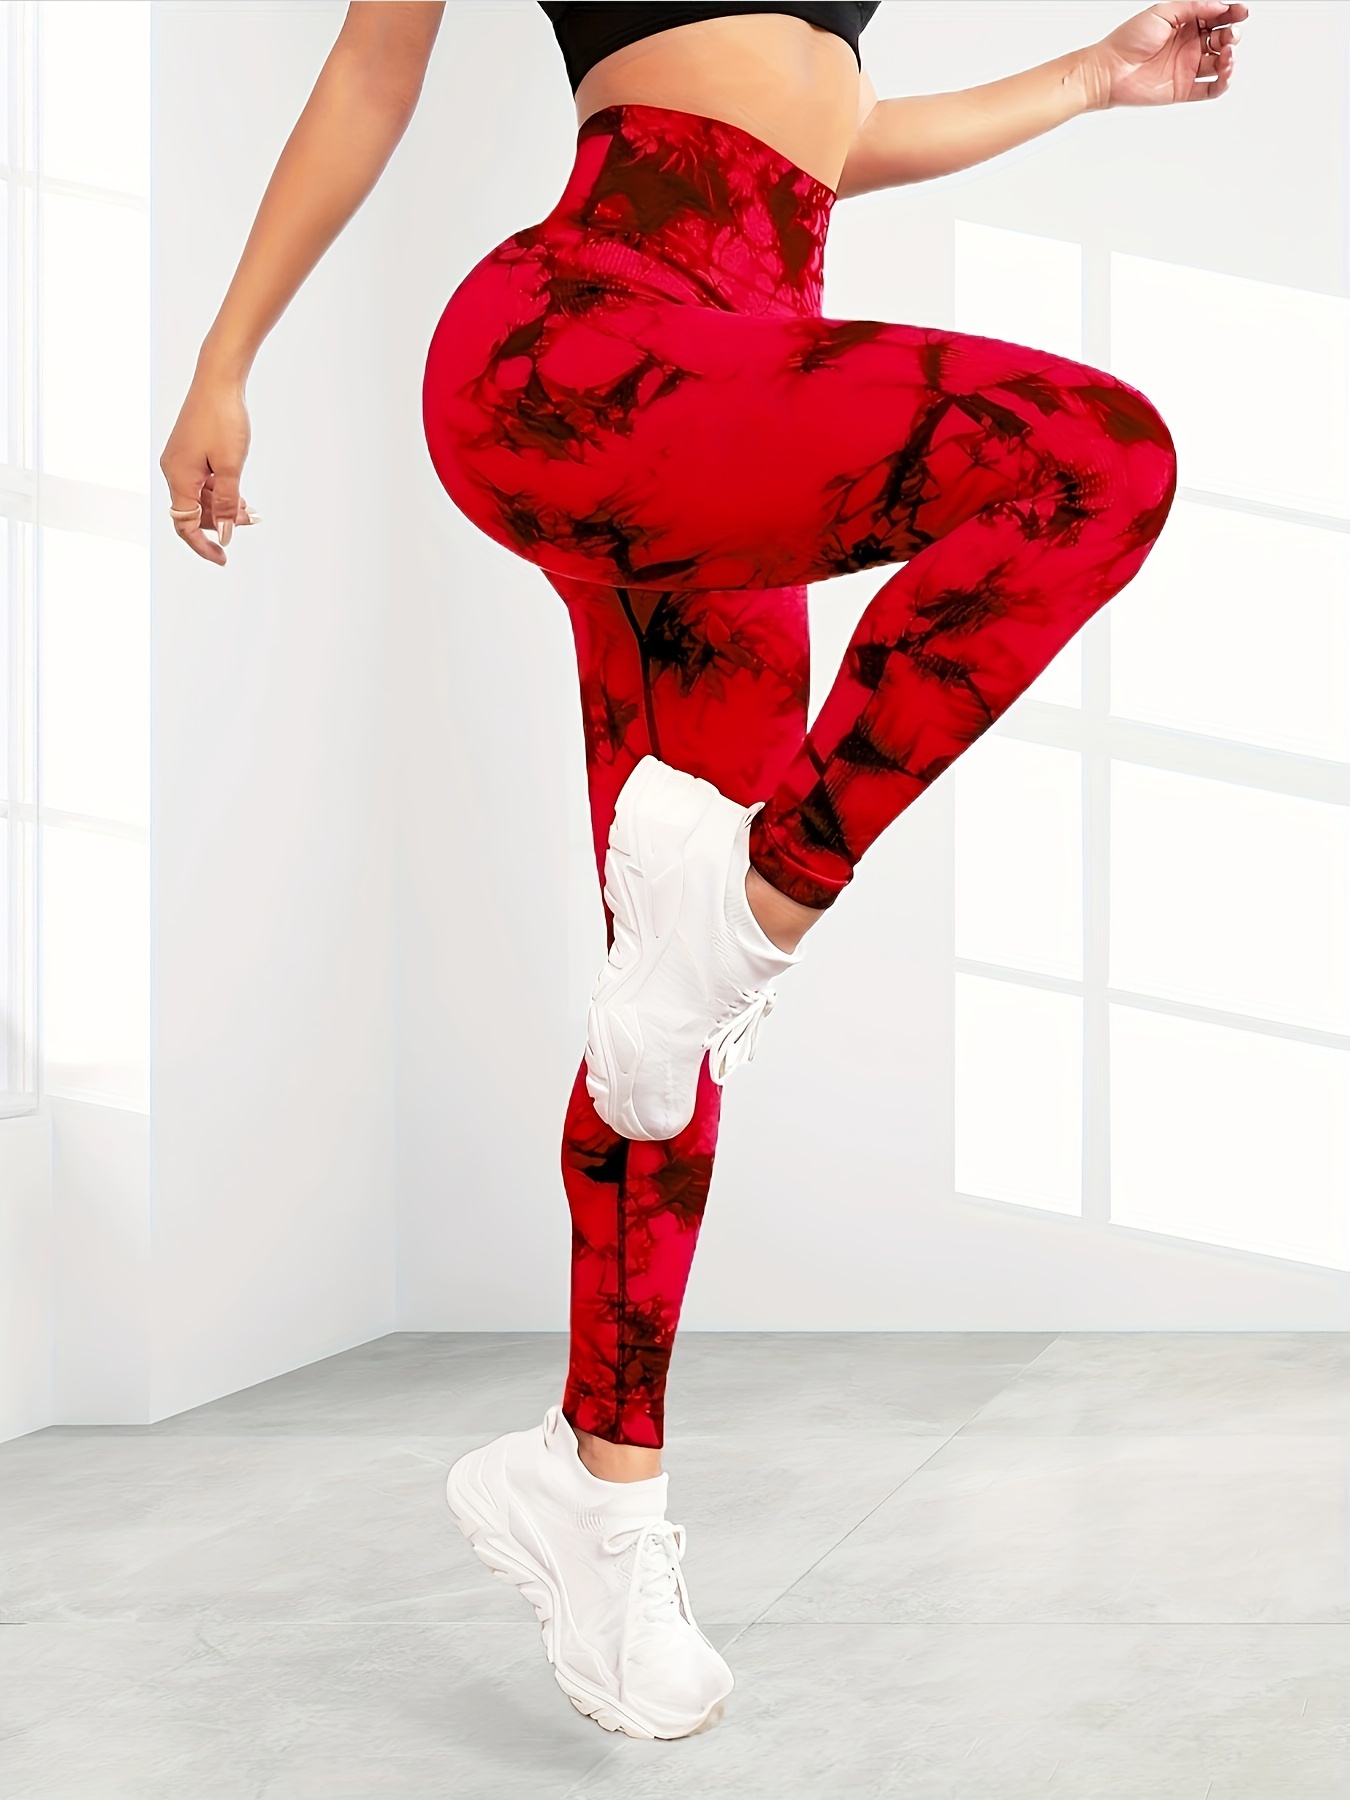 Shop Generic Marbling Tie_Dye Yoga Pants Sports Leggings Women